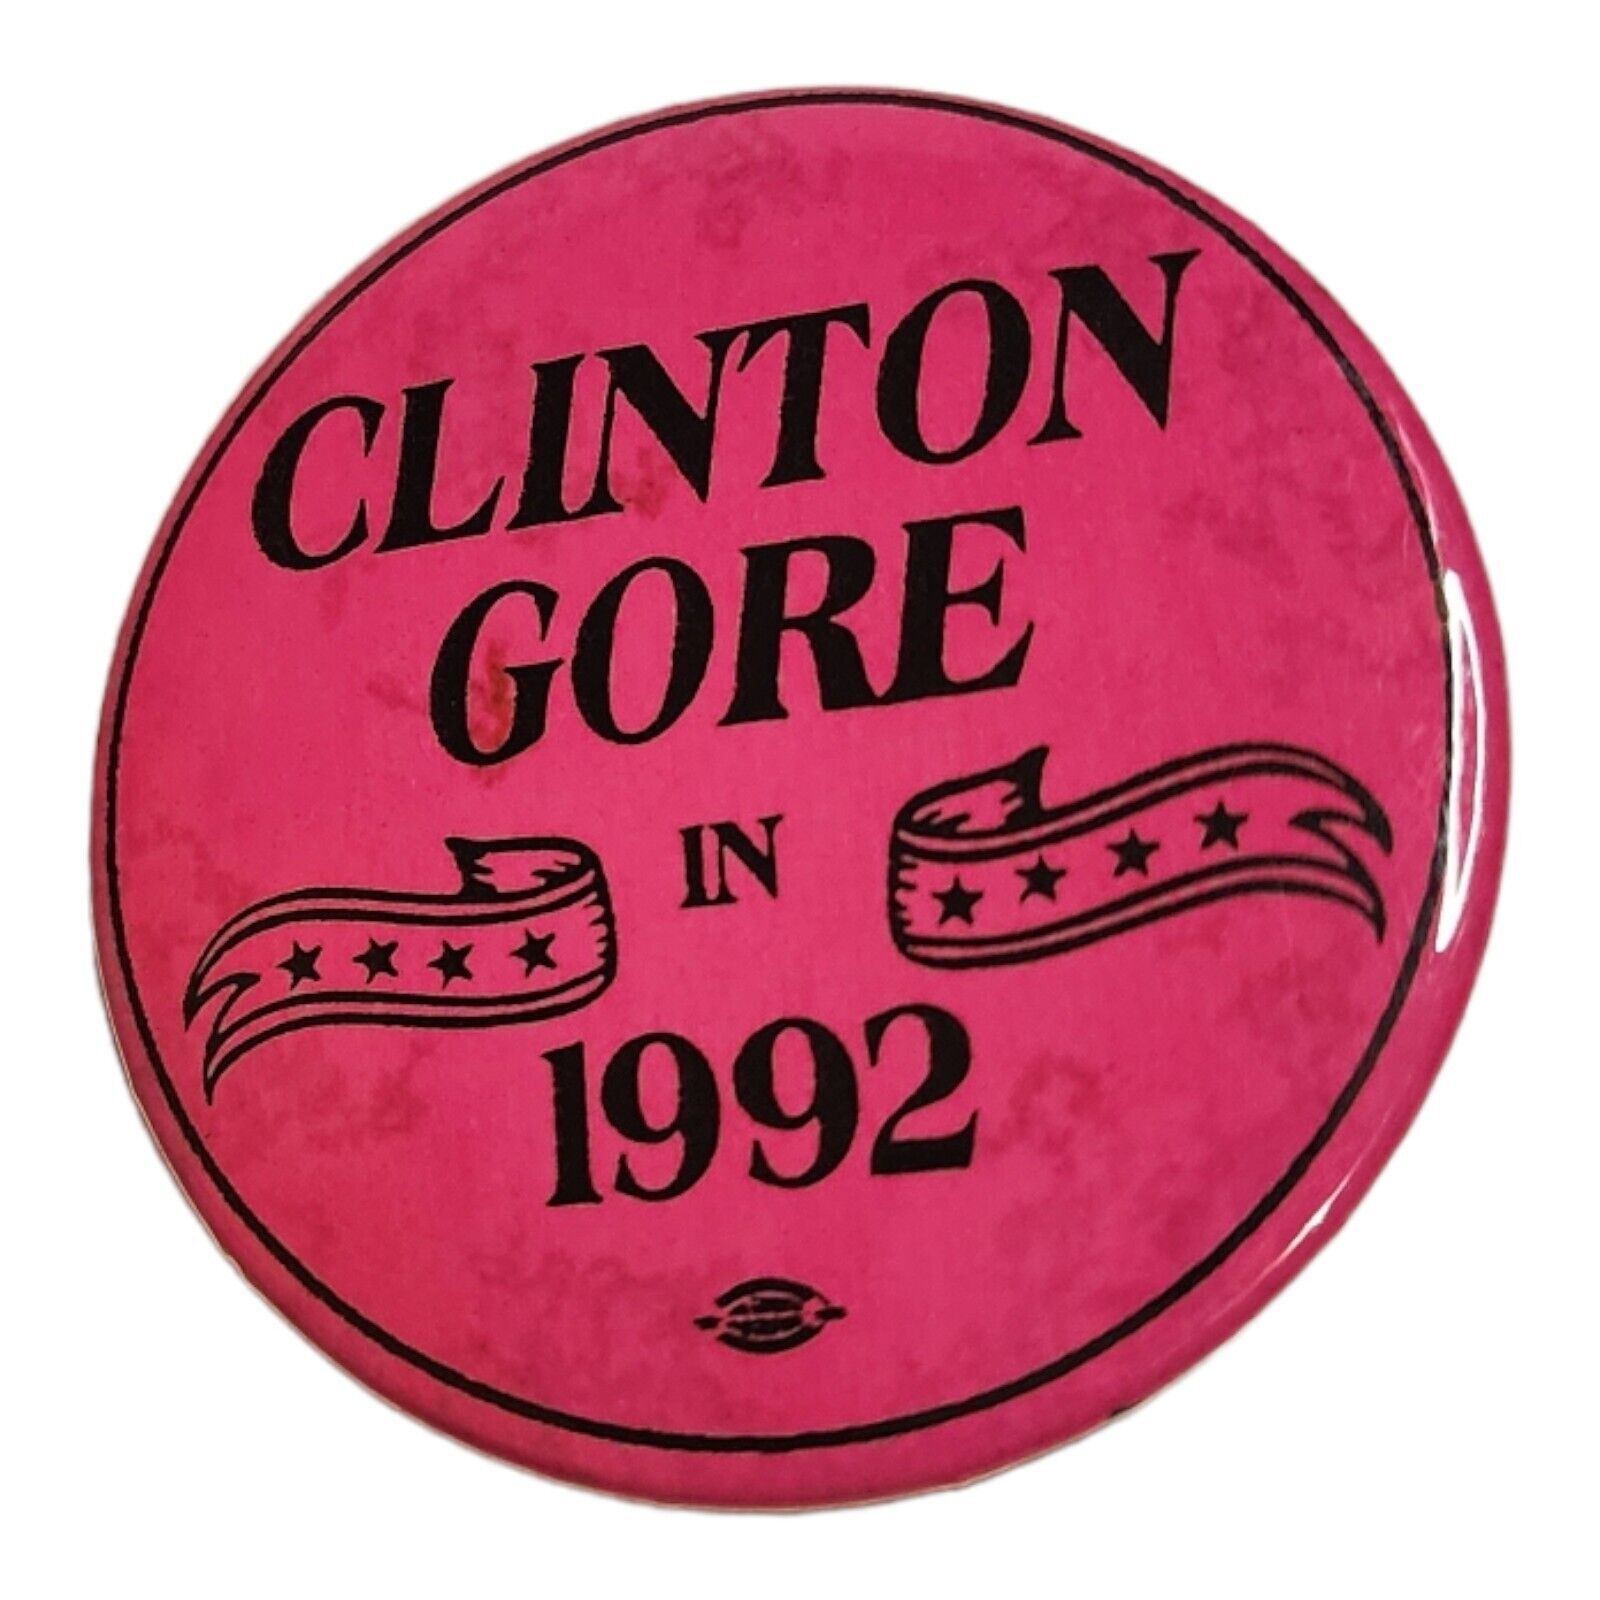 Bill Clinton AL Gore in 1992 Button Pinback Political Button Hot Pink